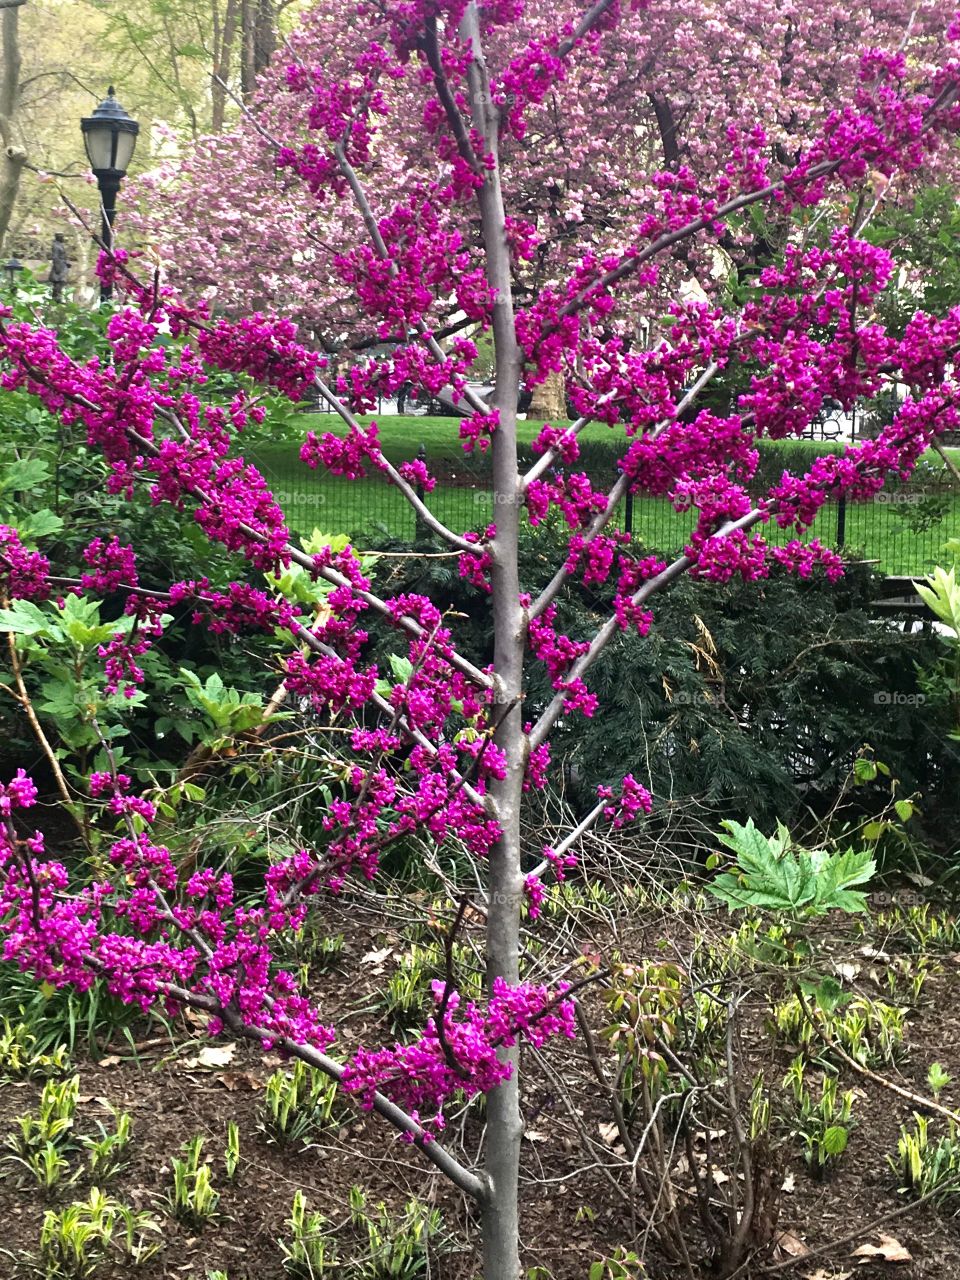 NYC park flower bloom